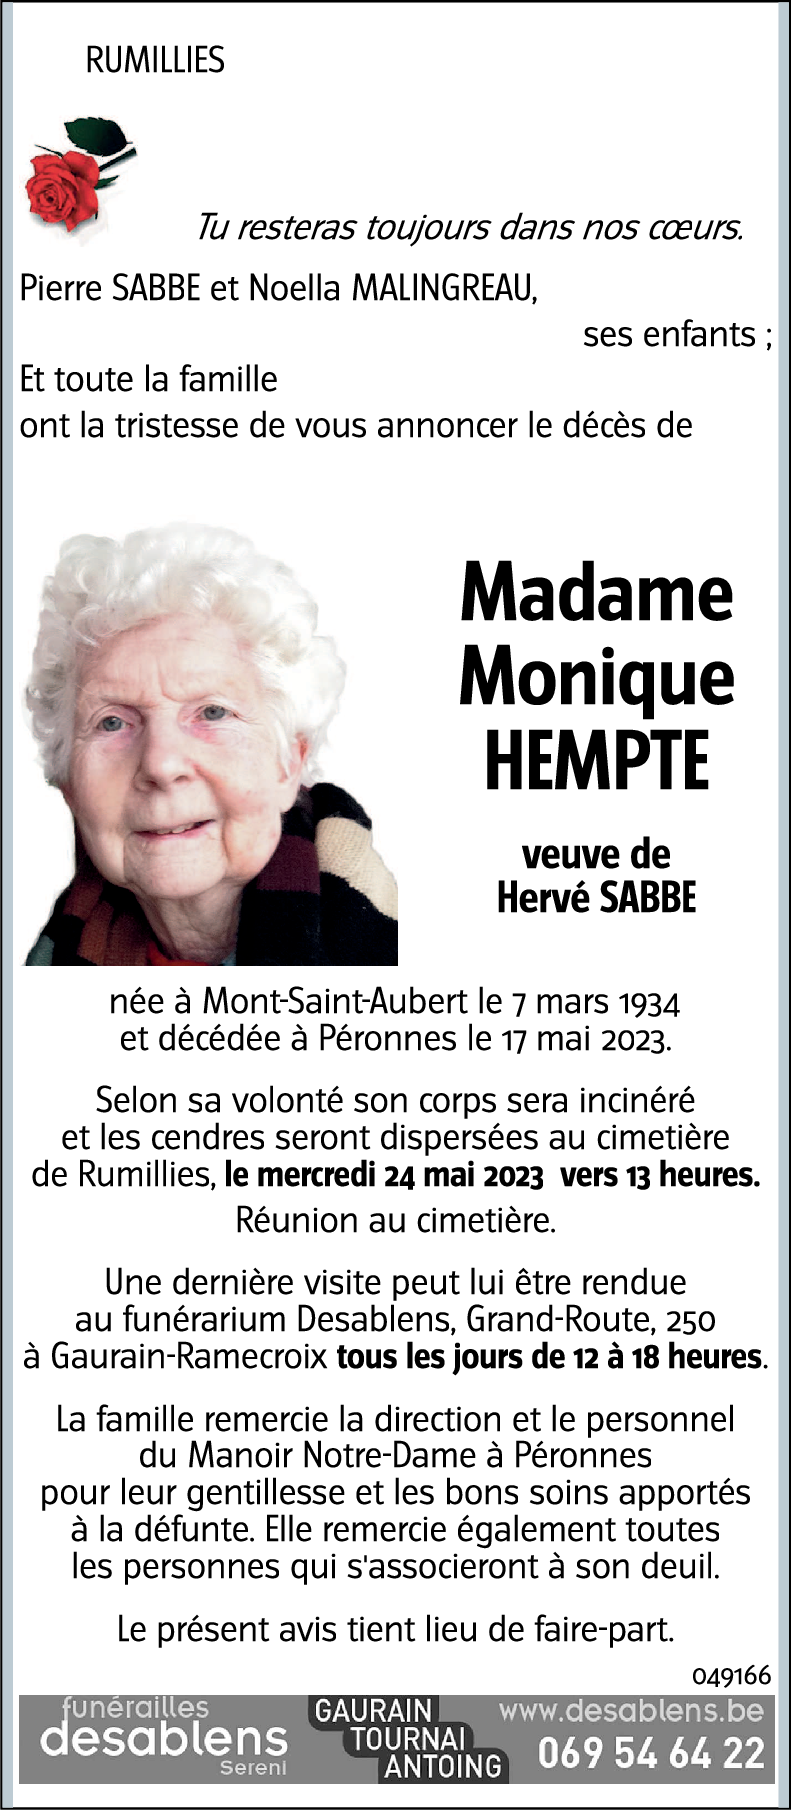 Monique HEMPTE